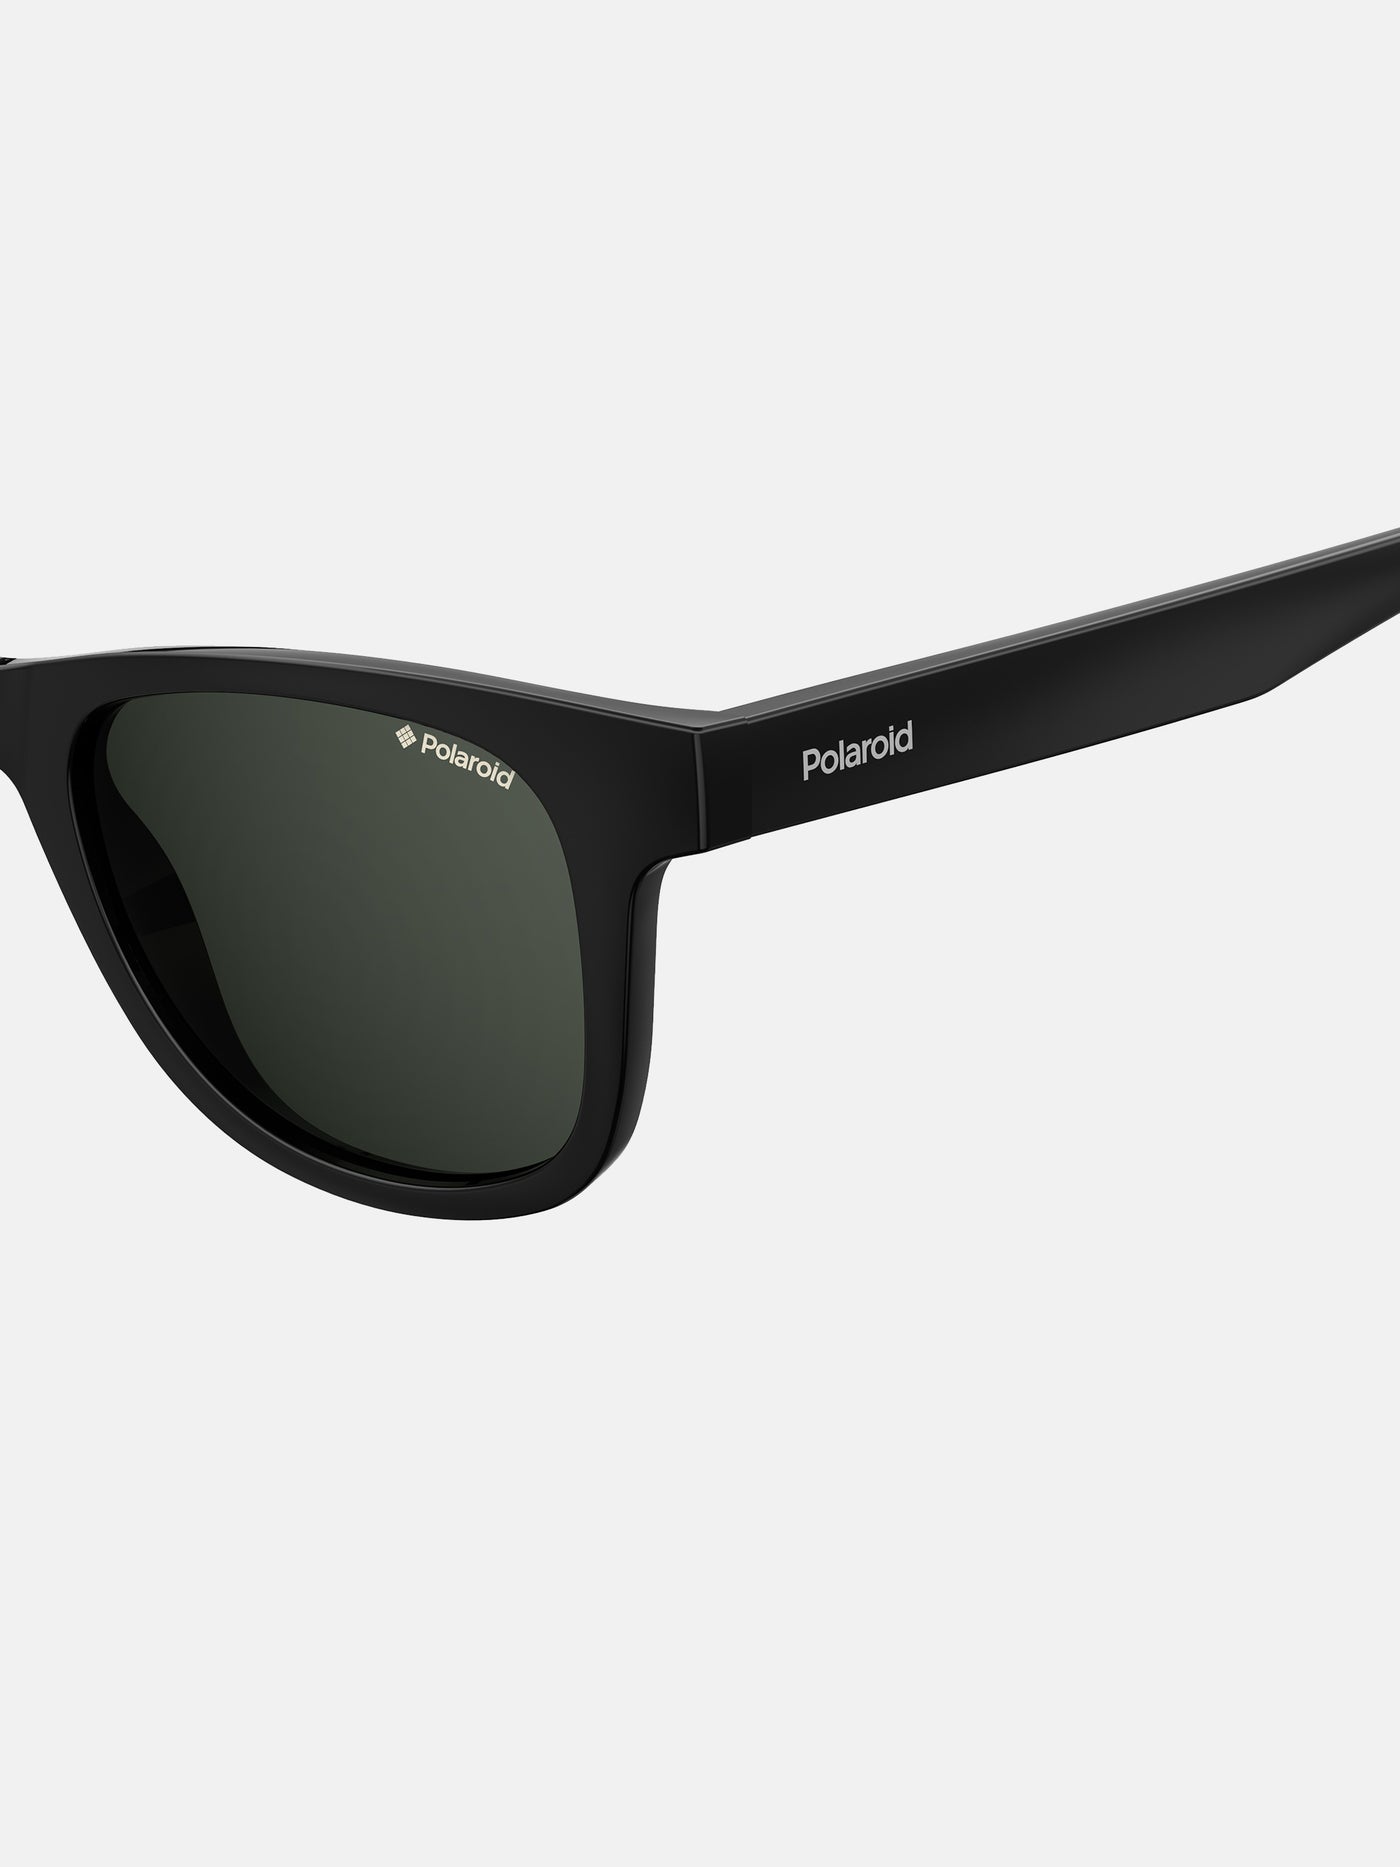 Polaroid sunglasses *Havaiana*, square